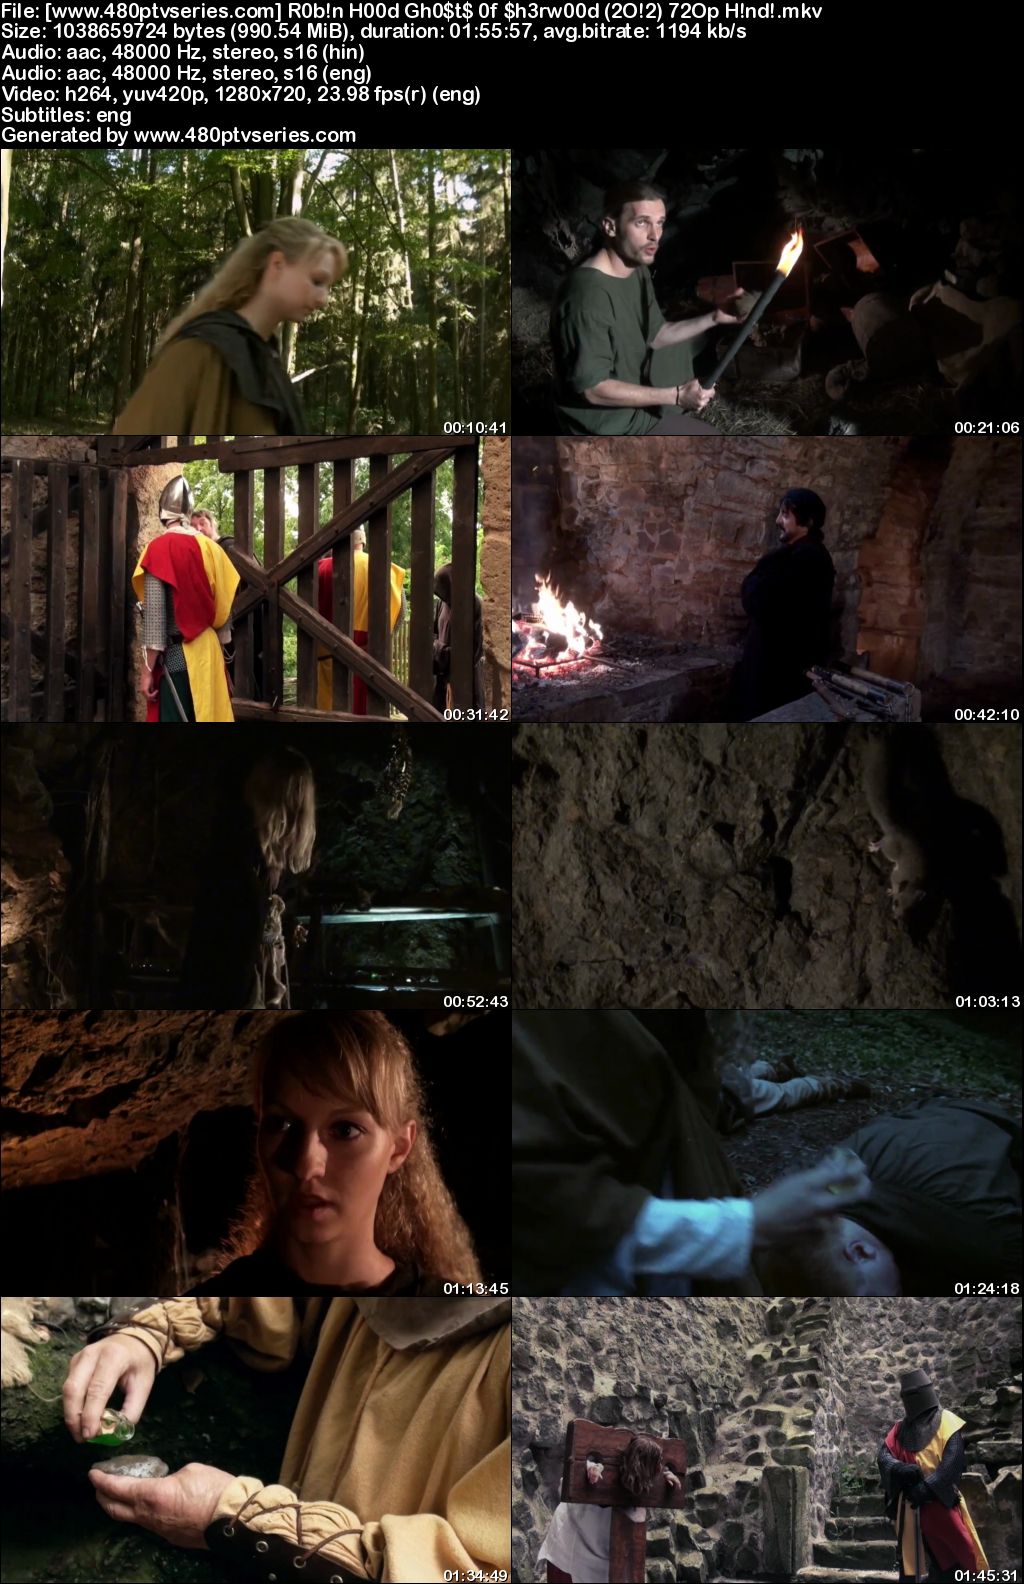 Watch Online Free Robin Hood: Ghosts of Sherwood (2012) Full Hindi Dual Audio Movie Download 480p 720p Bluray